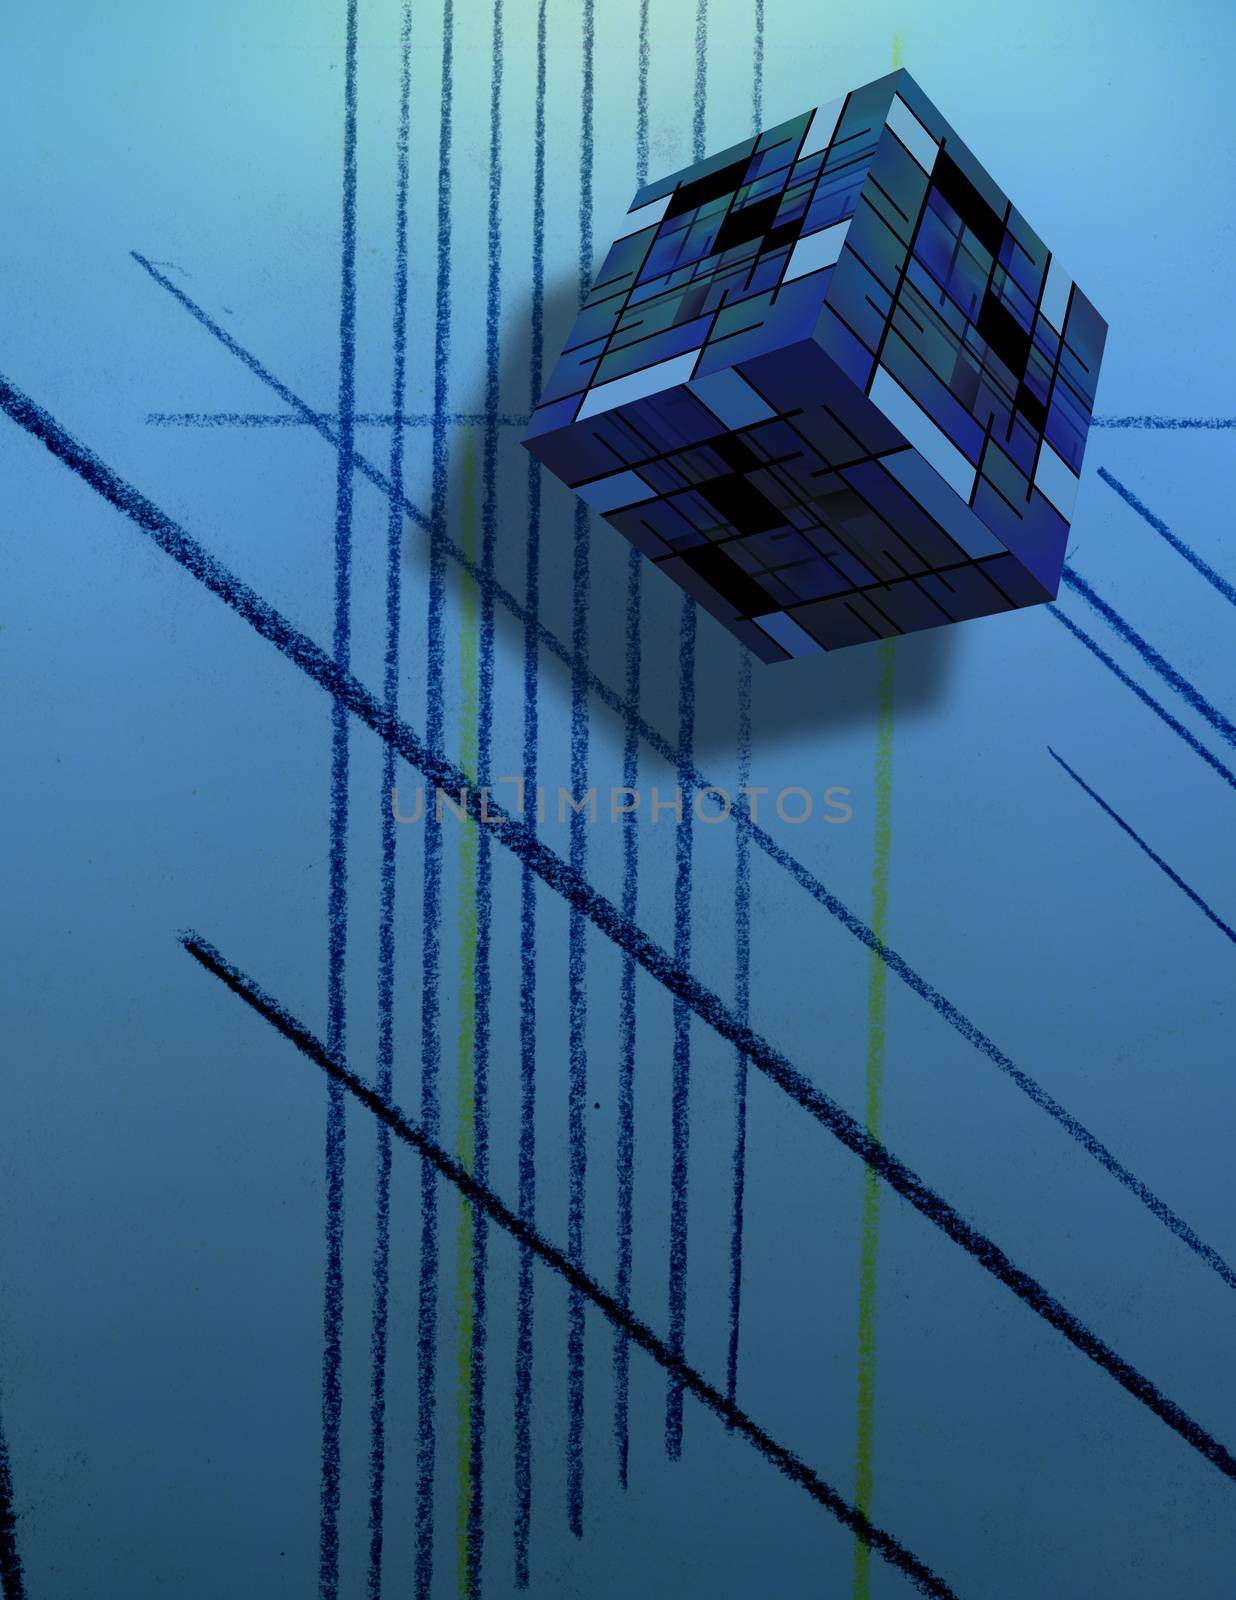 Mondrian Cube by applesstock